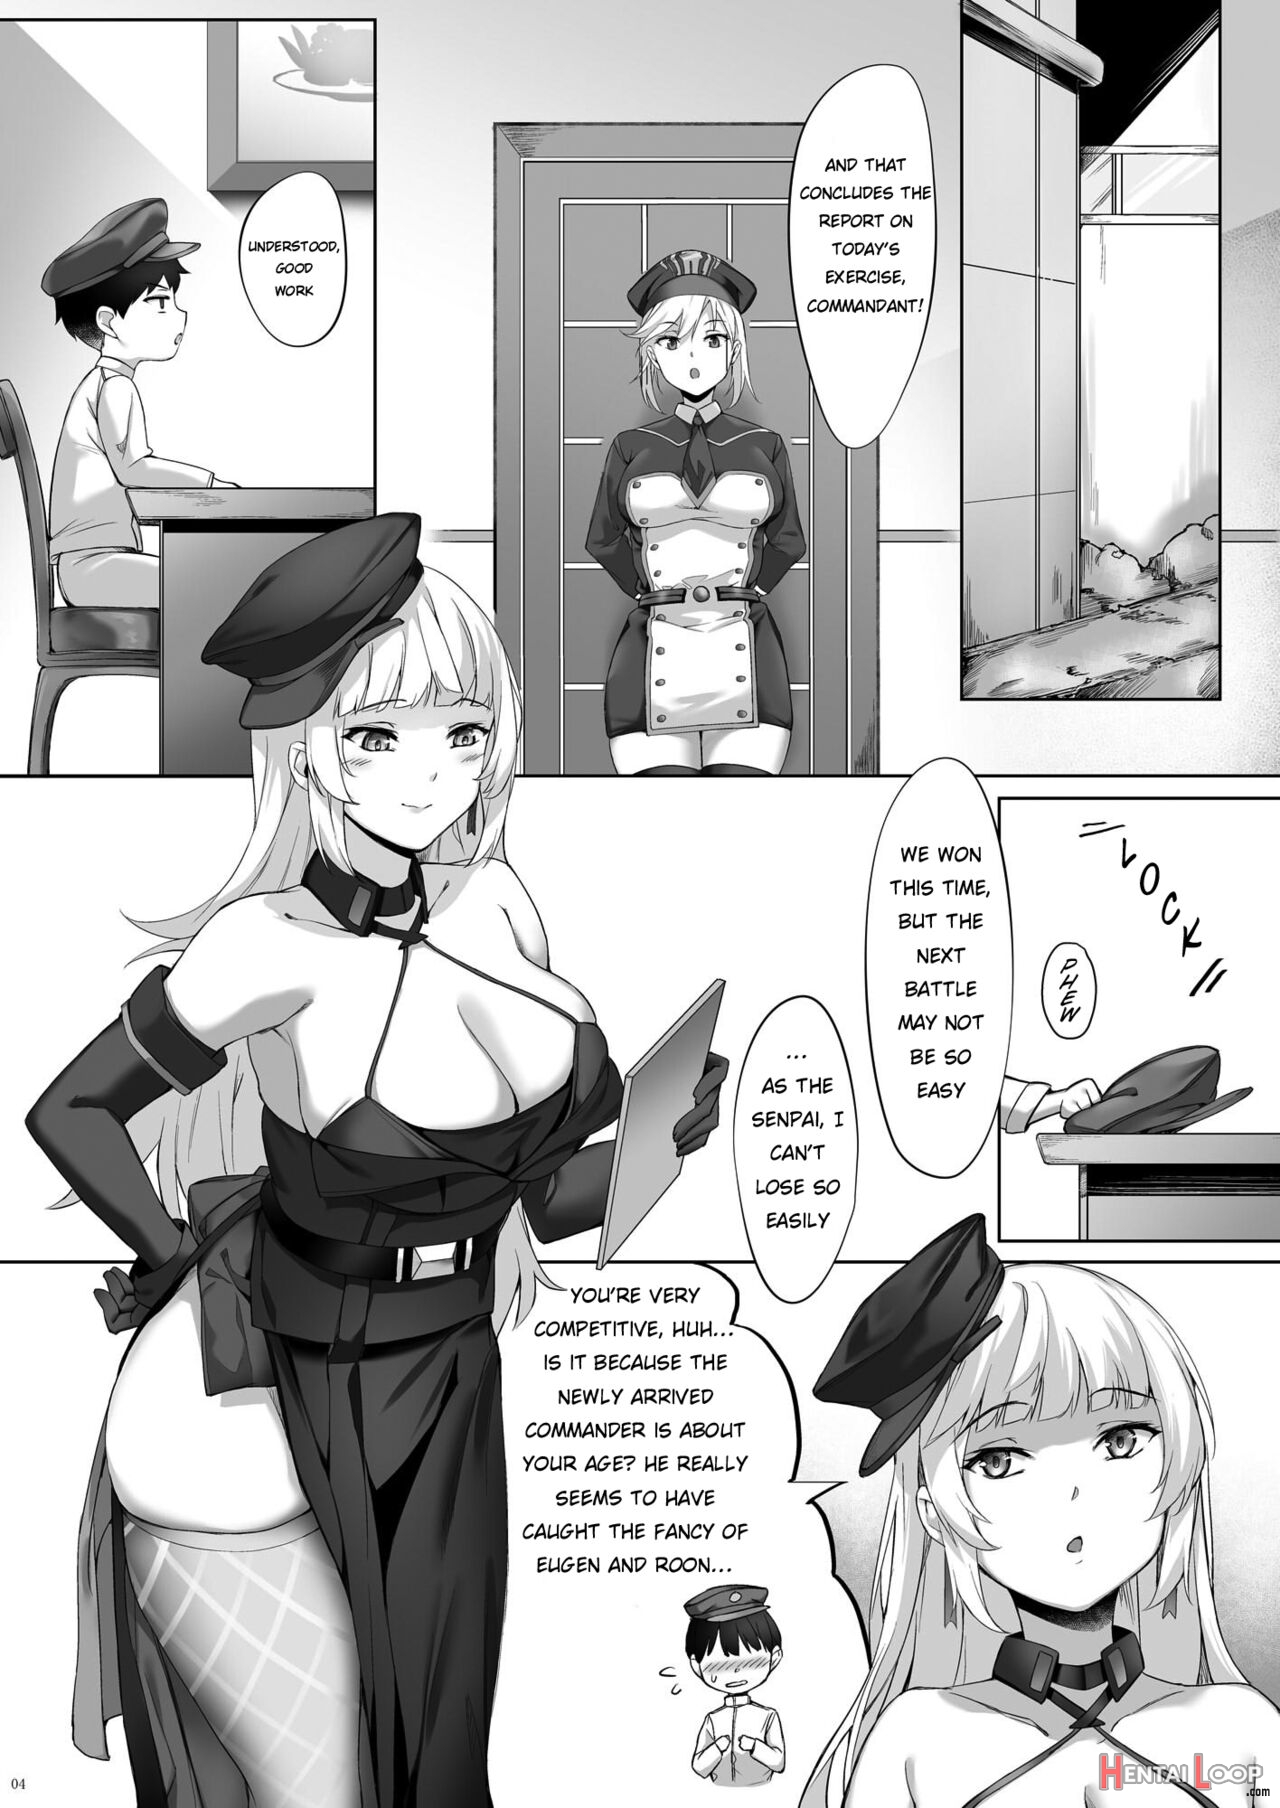 Yorck's Shota-induced Erotic Service page 4